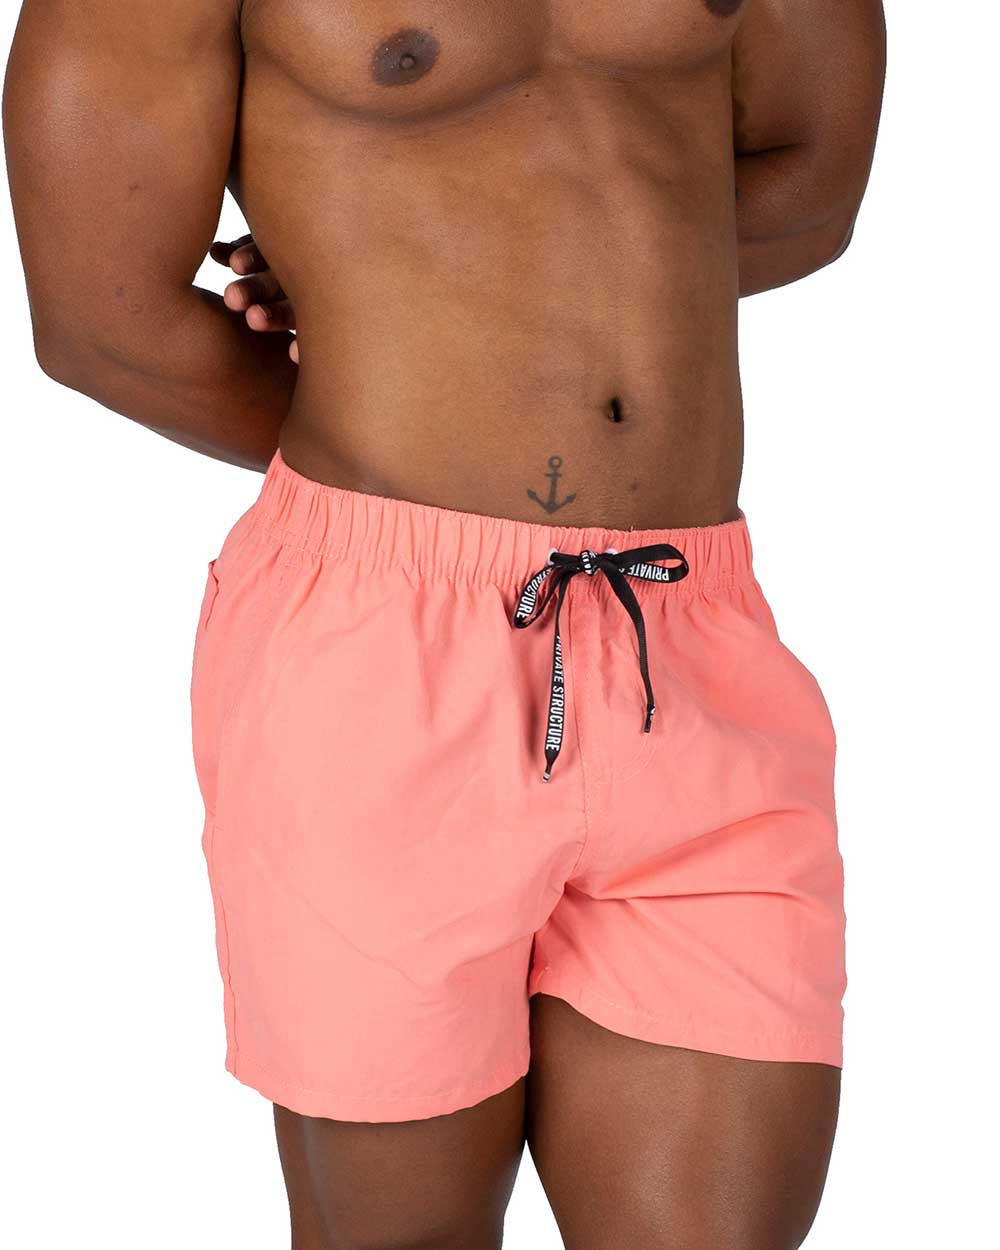 Beach Shorts - Pink B [4192]